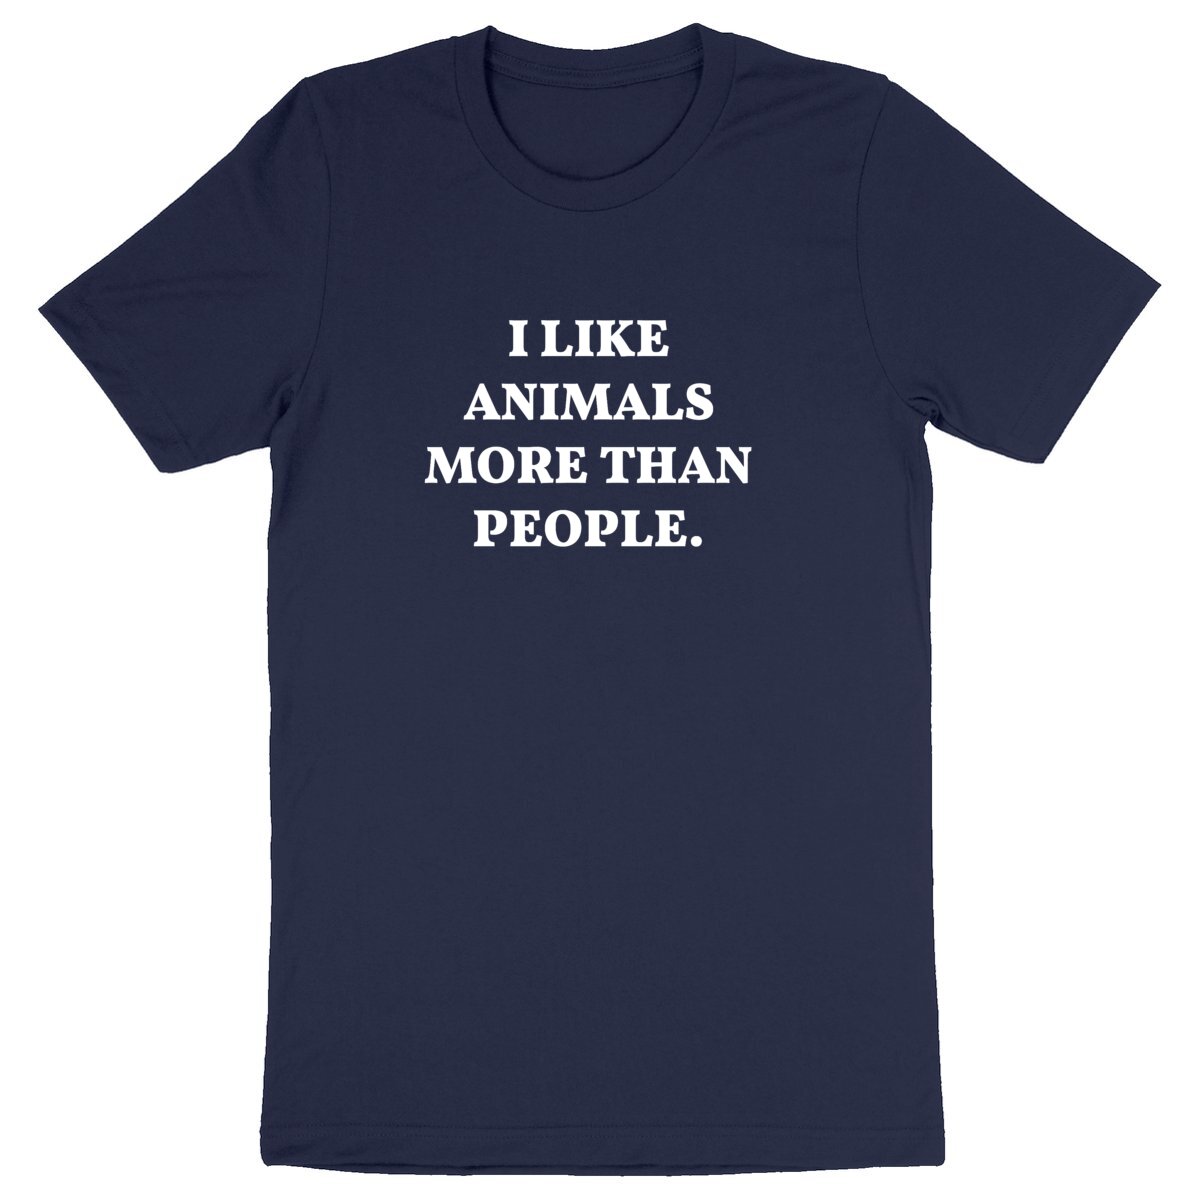 I like animals more than people - Unisex Organic T-shirt